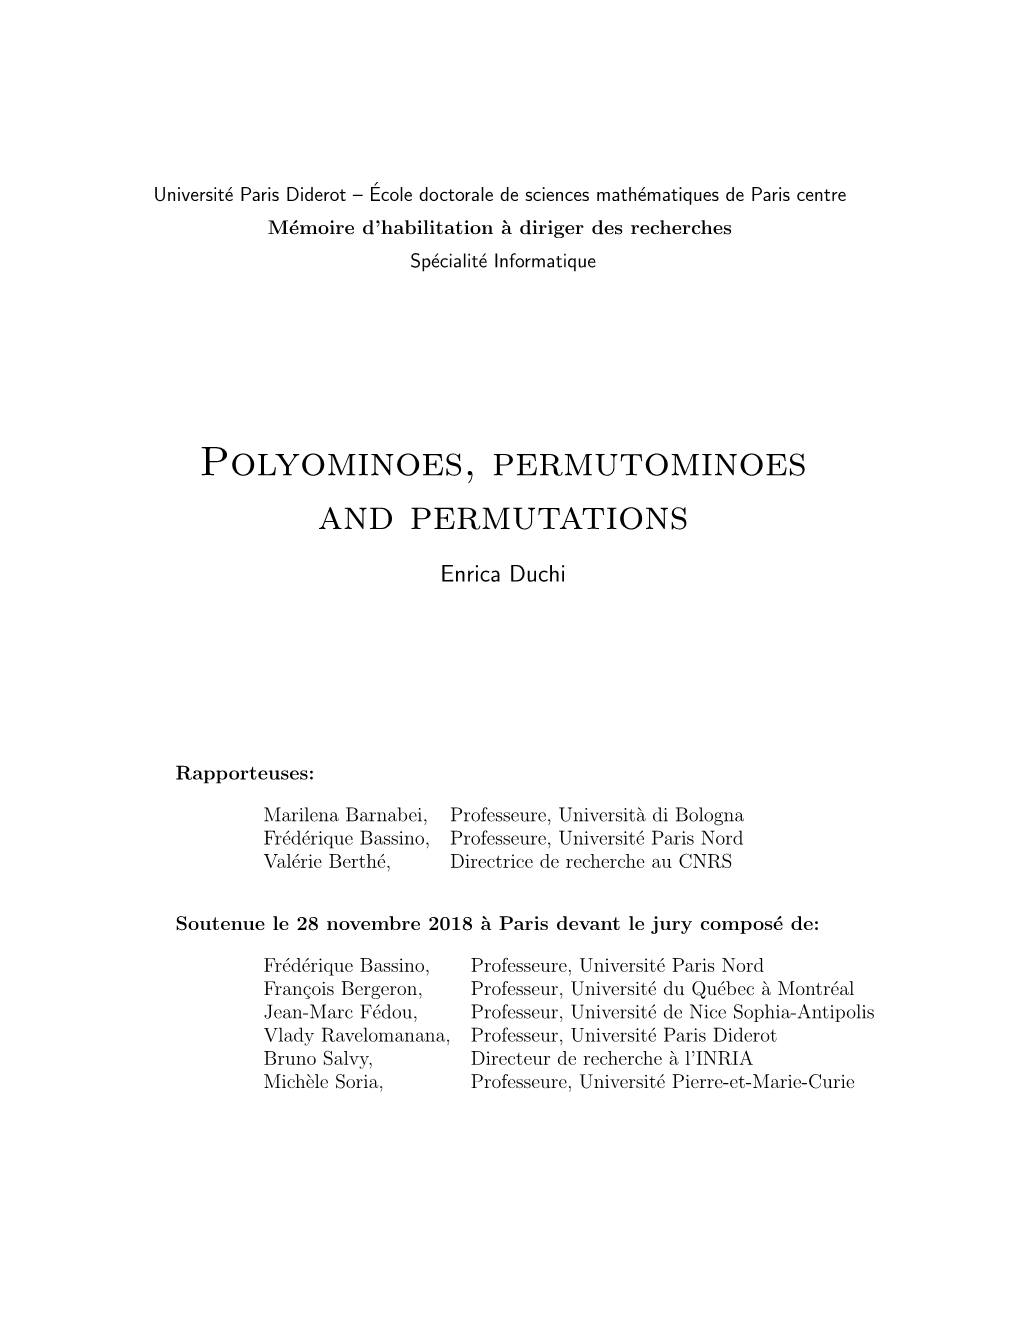 Polyominoes, Permutominoes and Permutations Enrica Duchi